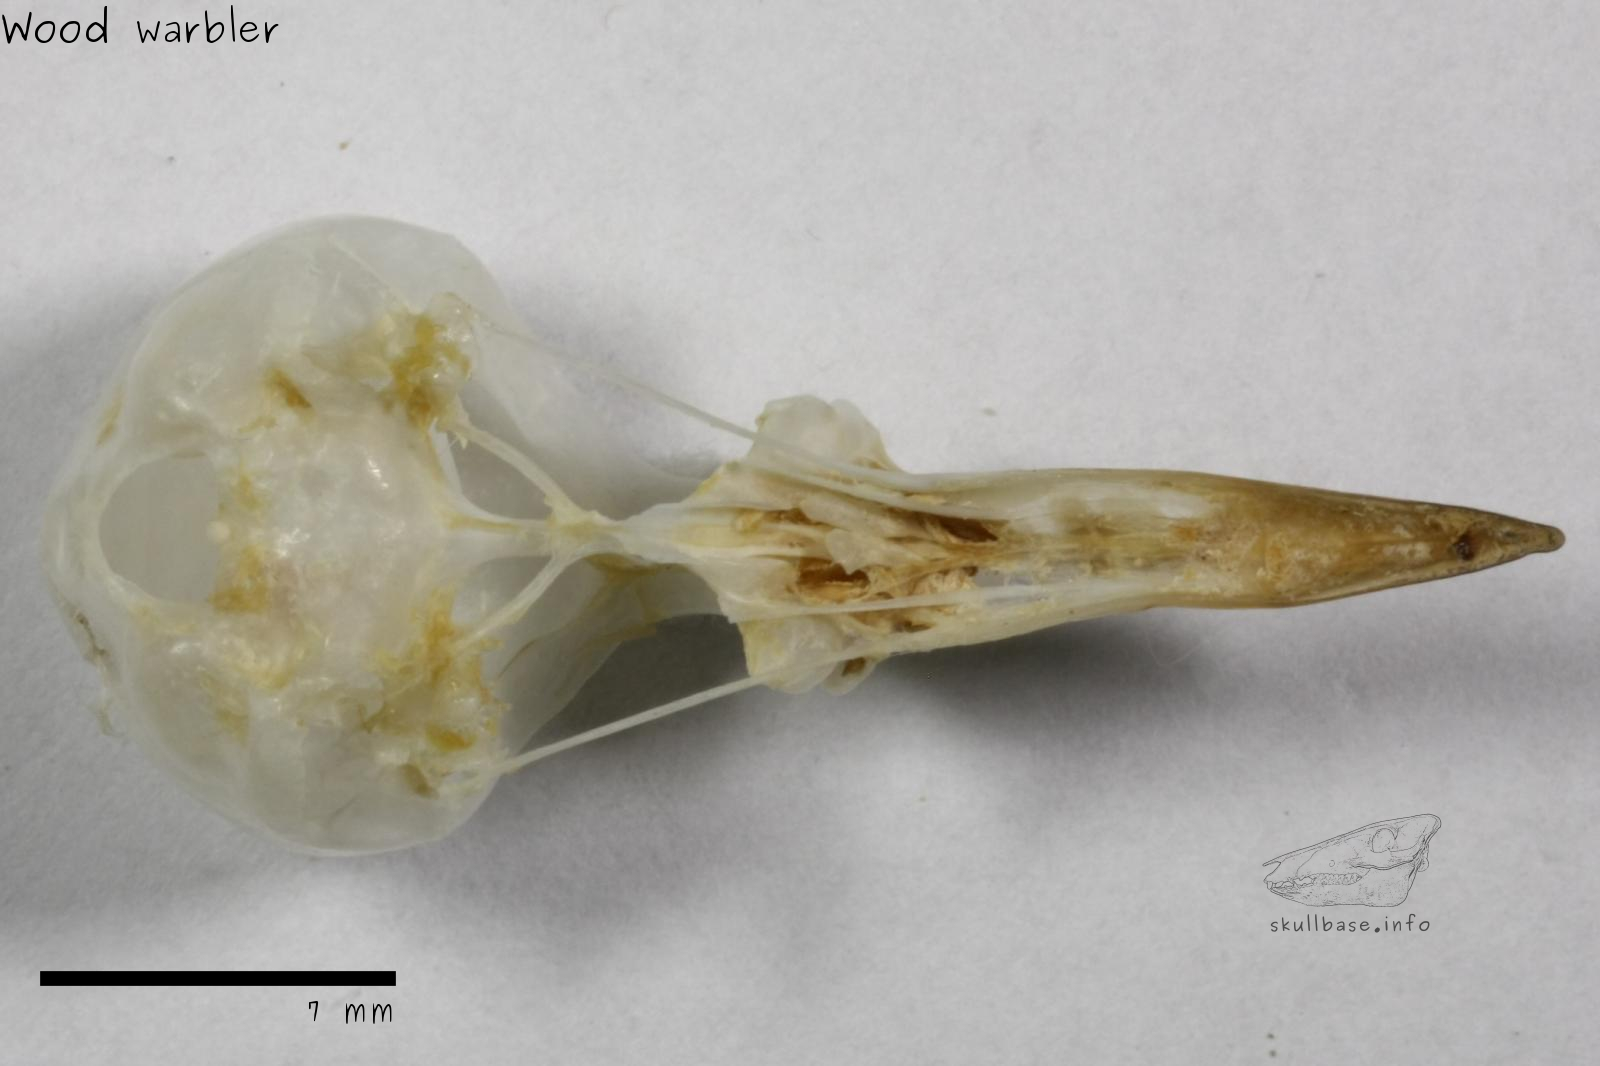 Wood warbler (Phylloscopus sibilatrix) skull ventral view